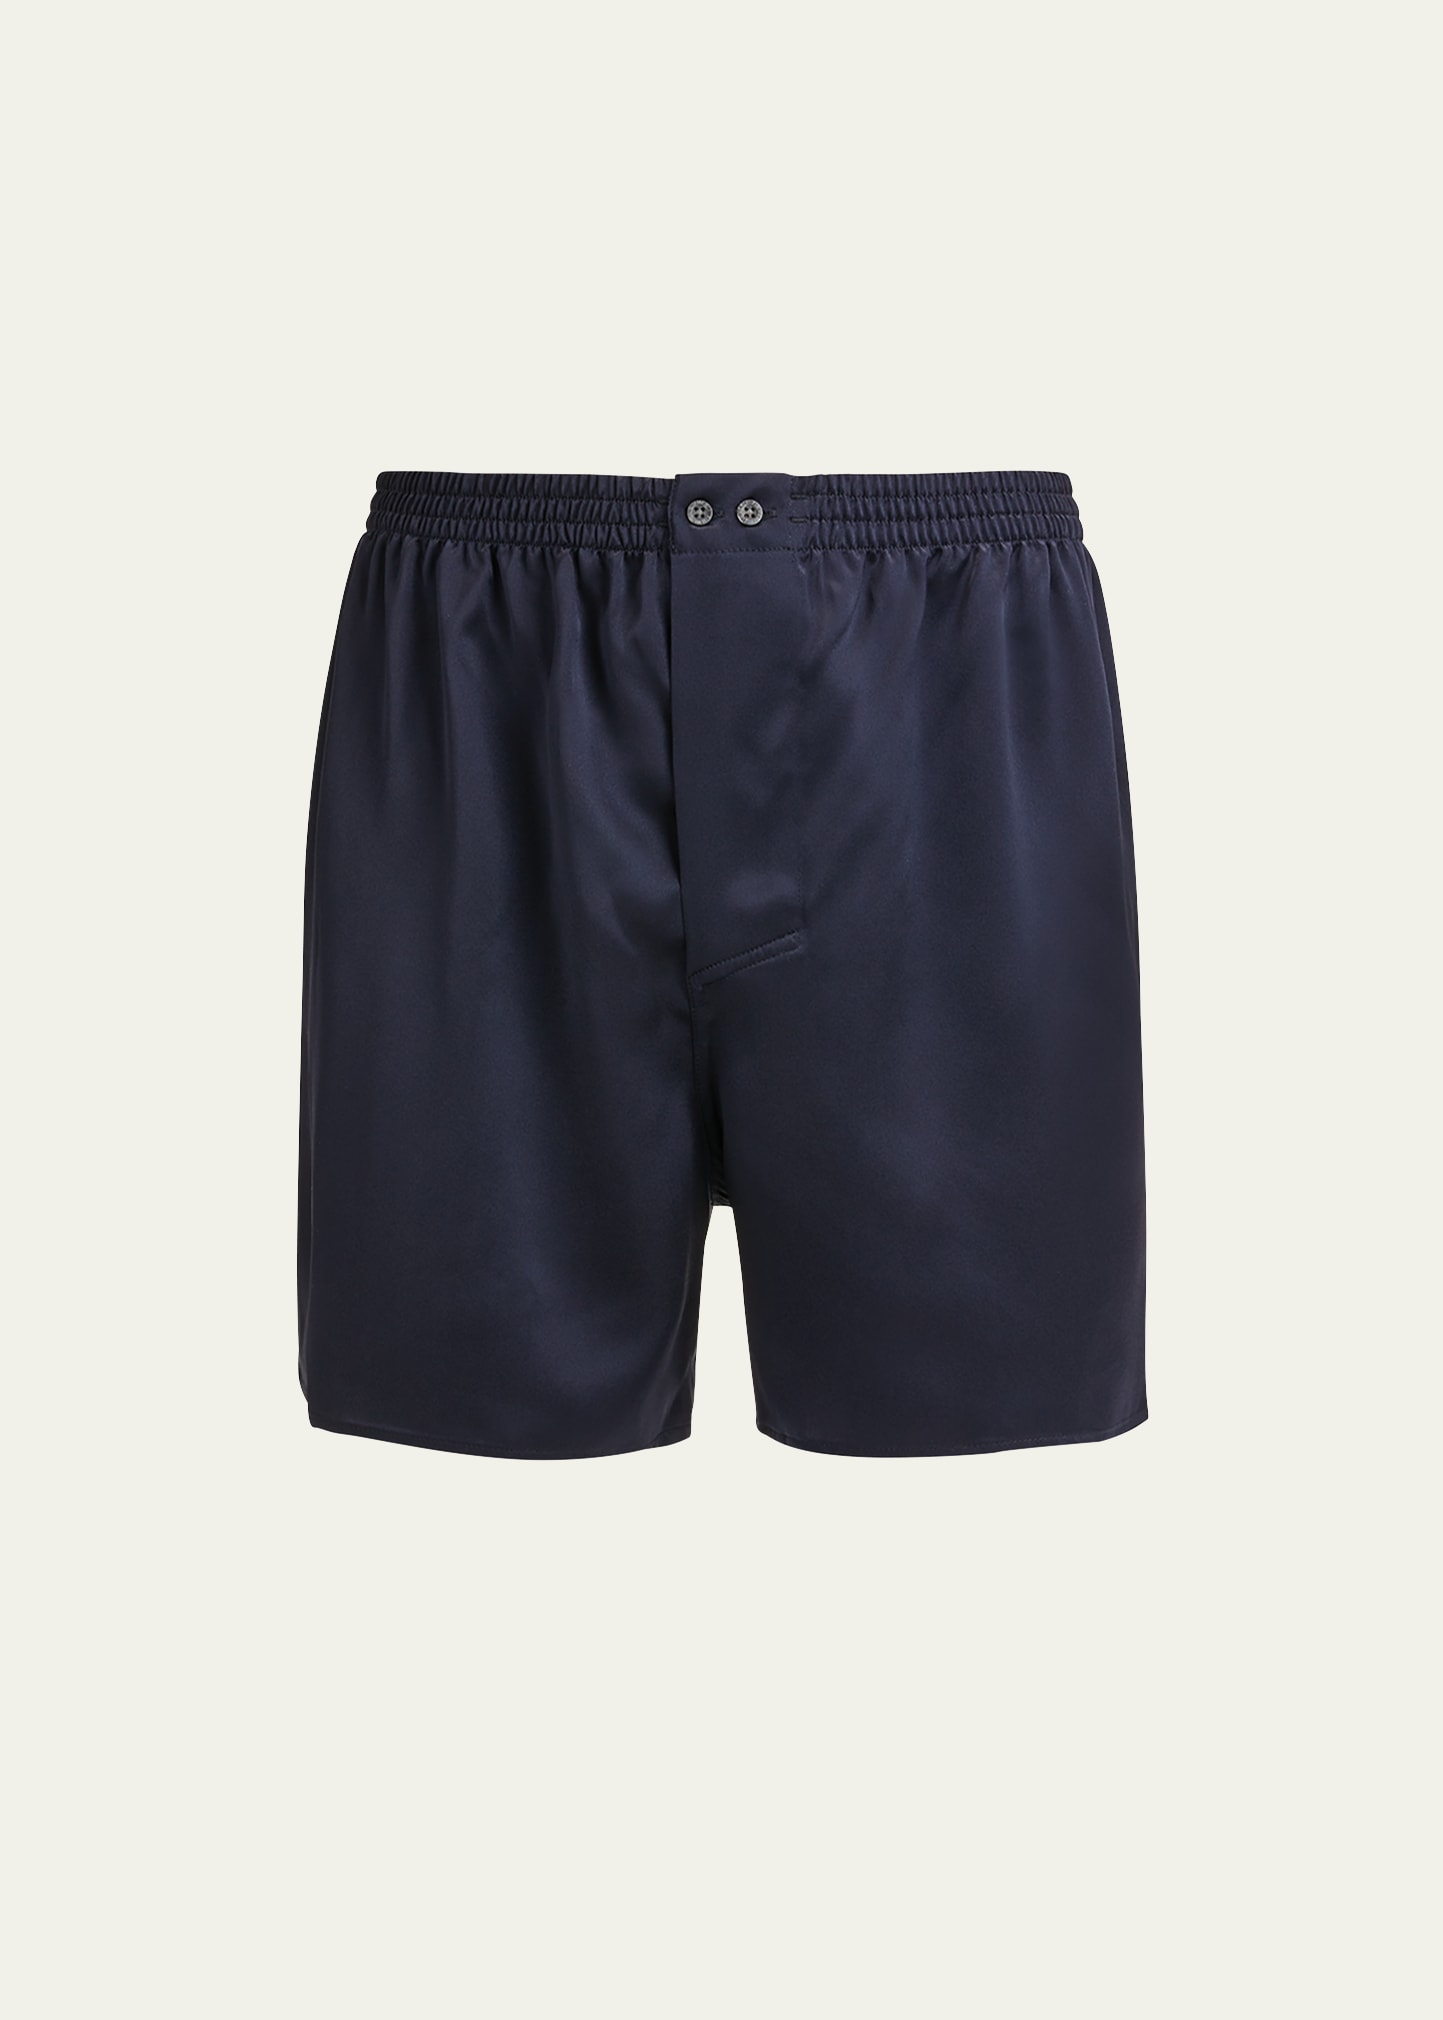 Men's Silk Boxer Shorts